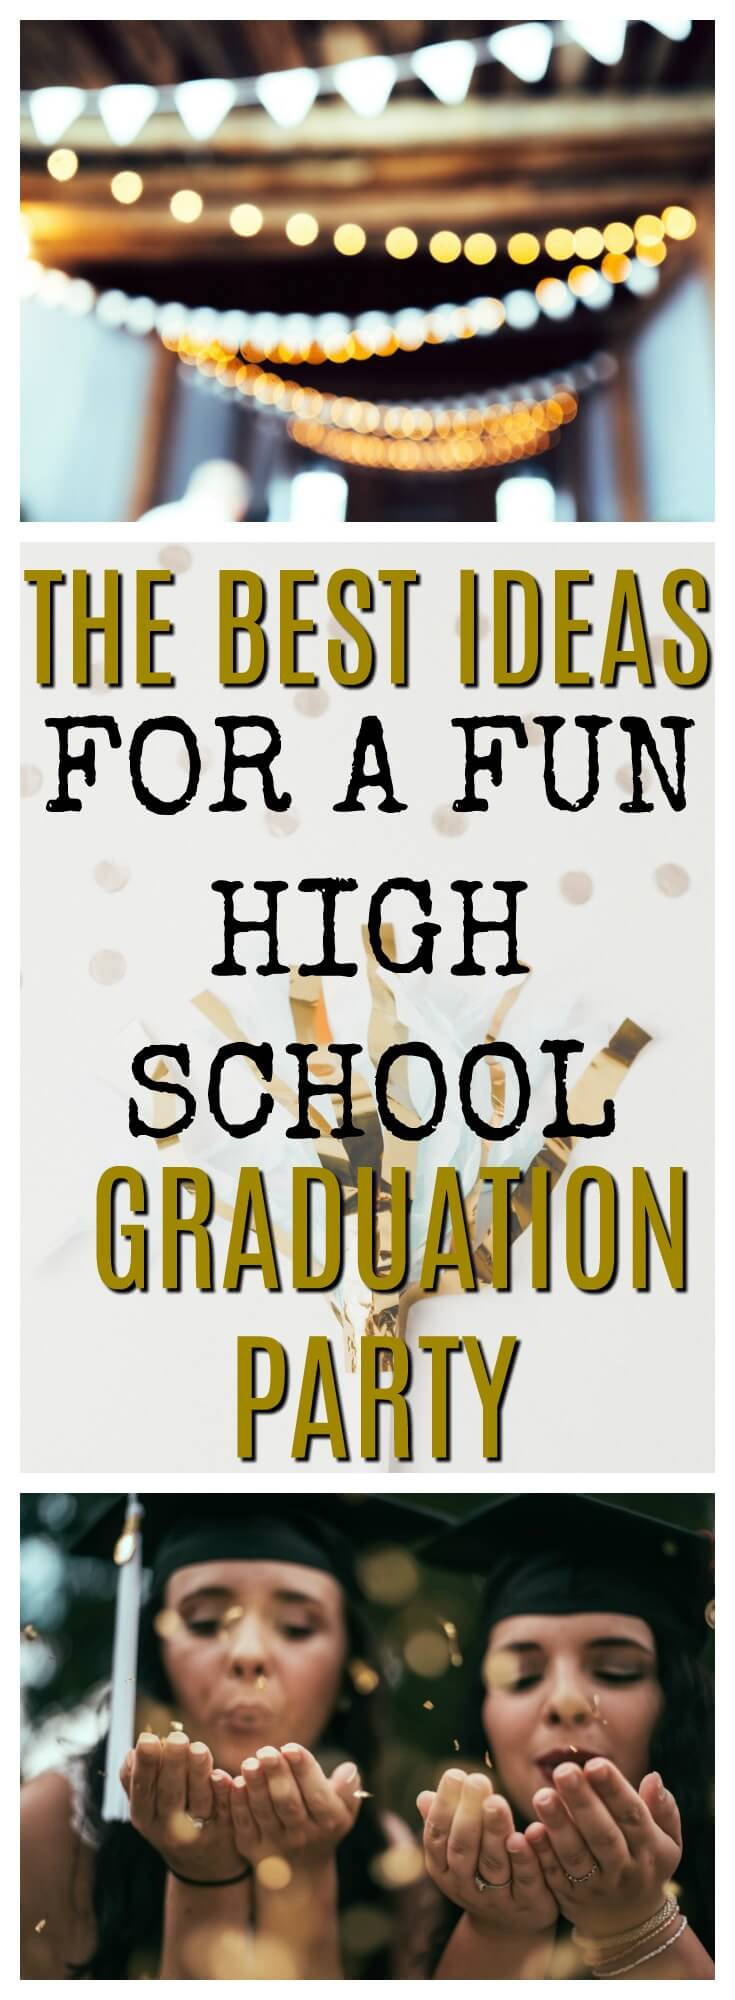 High School Graduation Party Ideas For Him
 Graduation Party Ideas 2019 How to Celebrate [step by step]